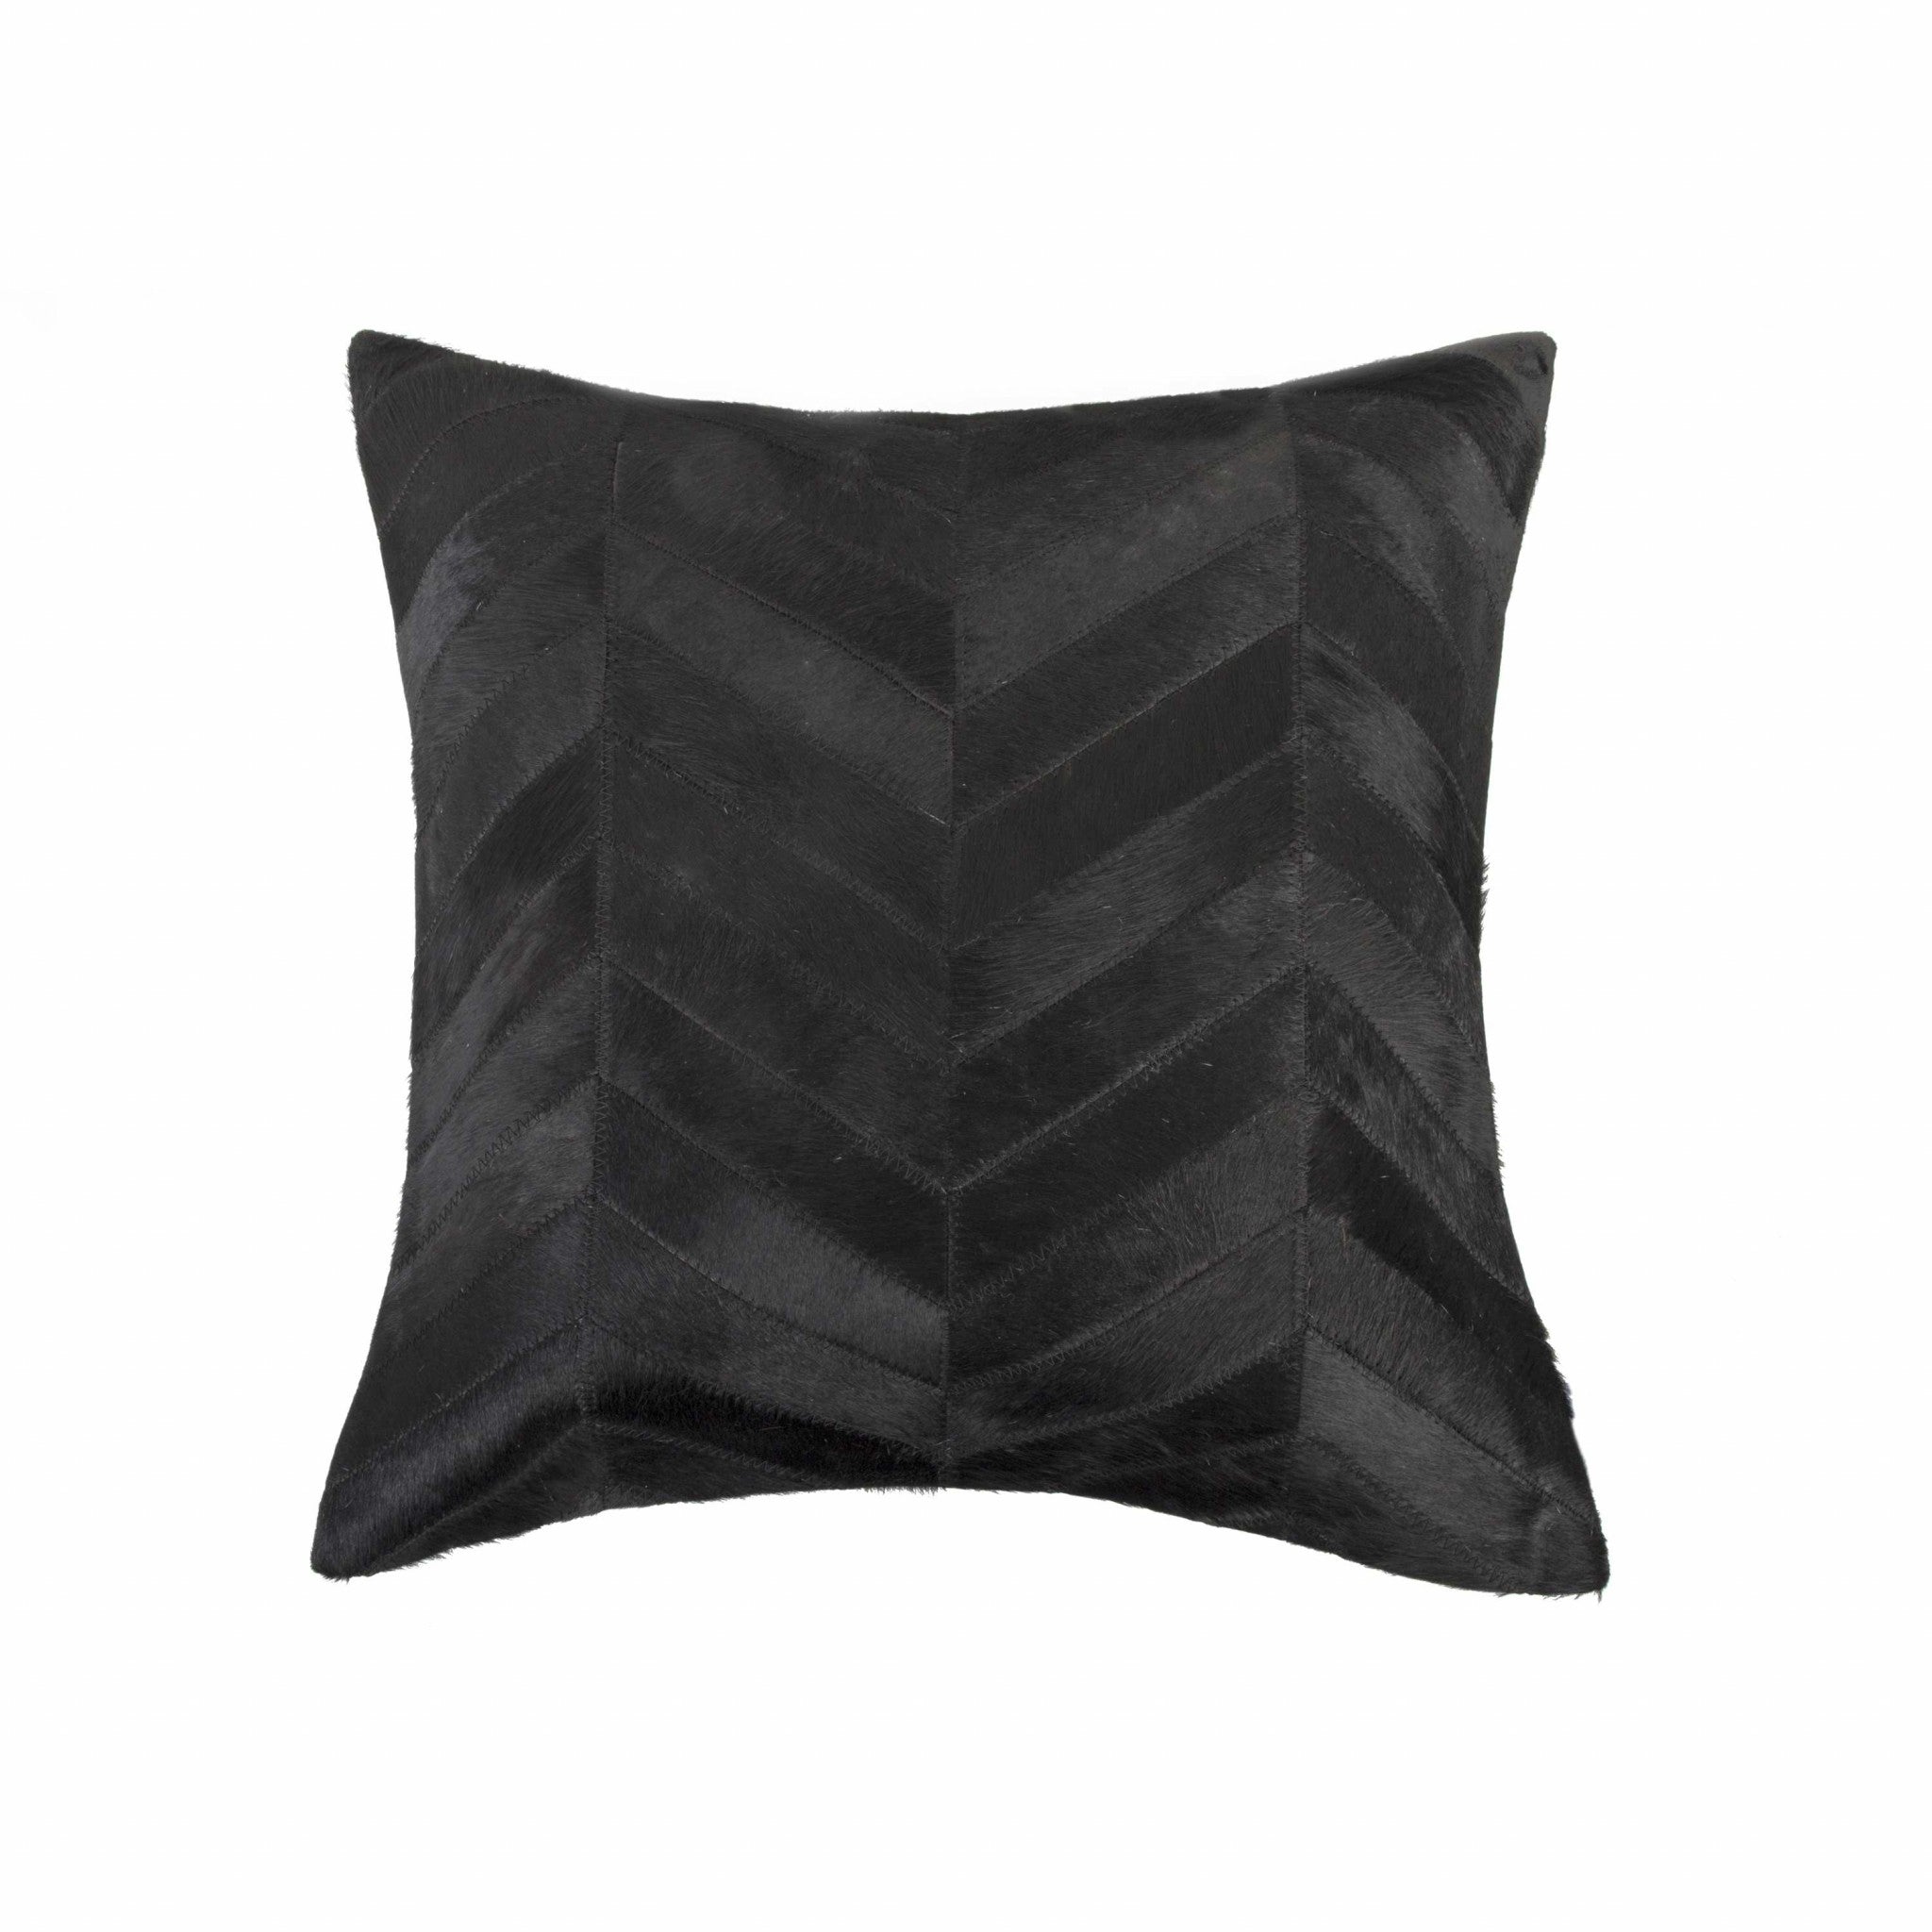 Natural Black Cowhide Pillow